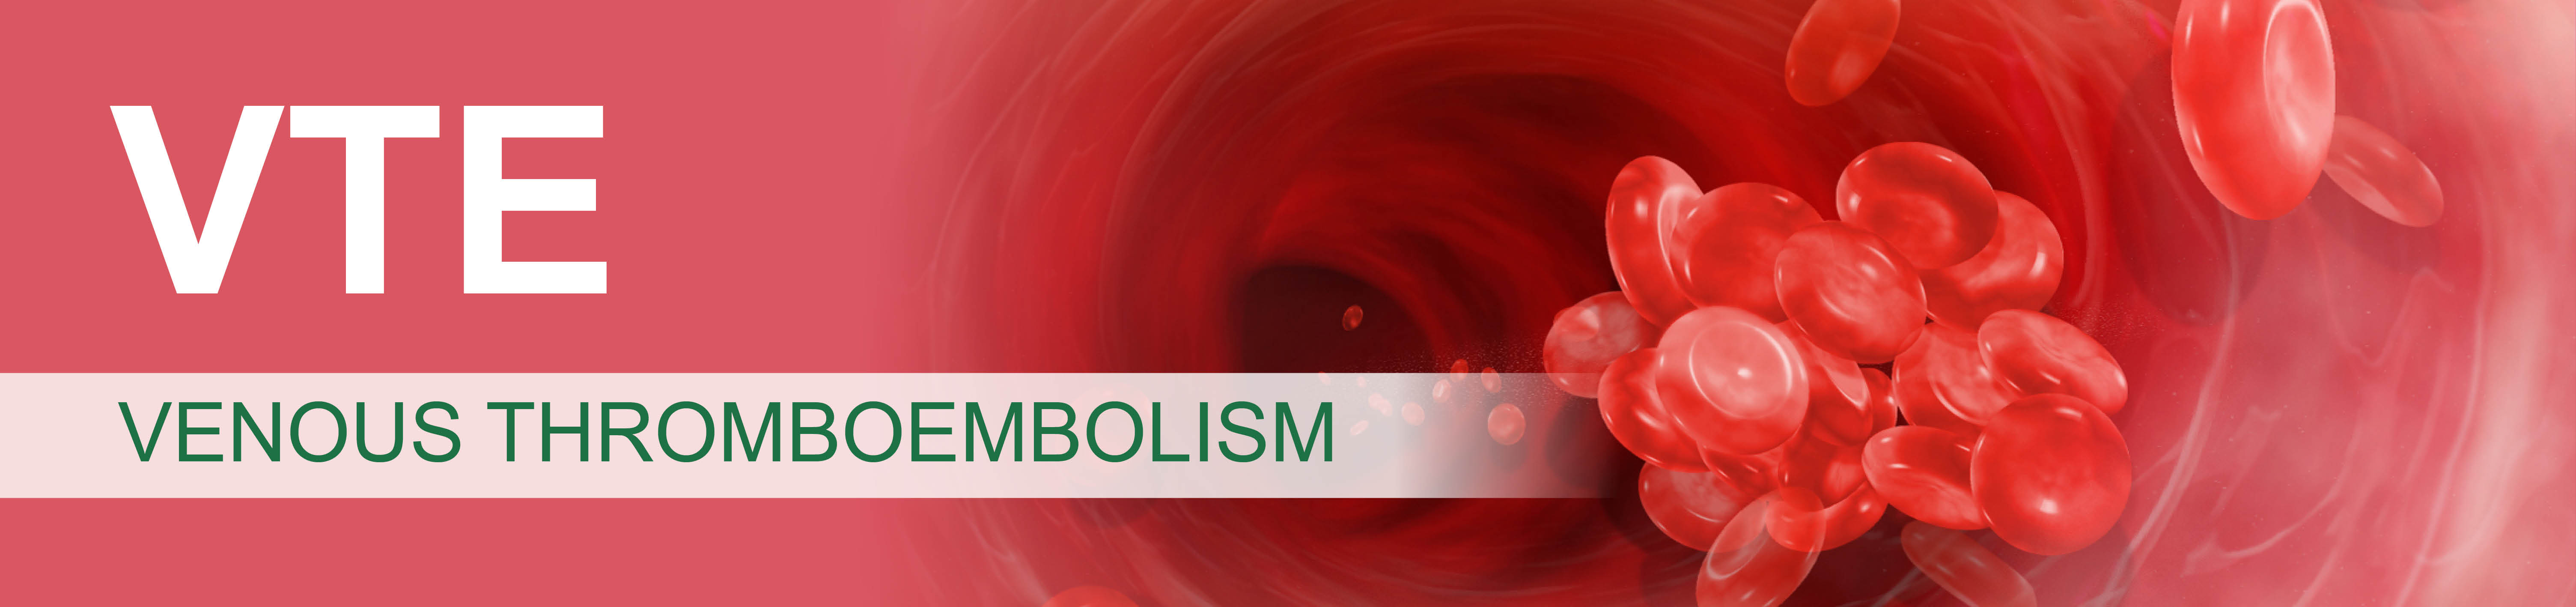 VTE: Venous Thromboembolism